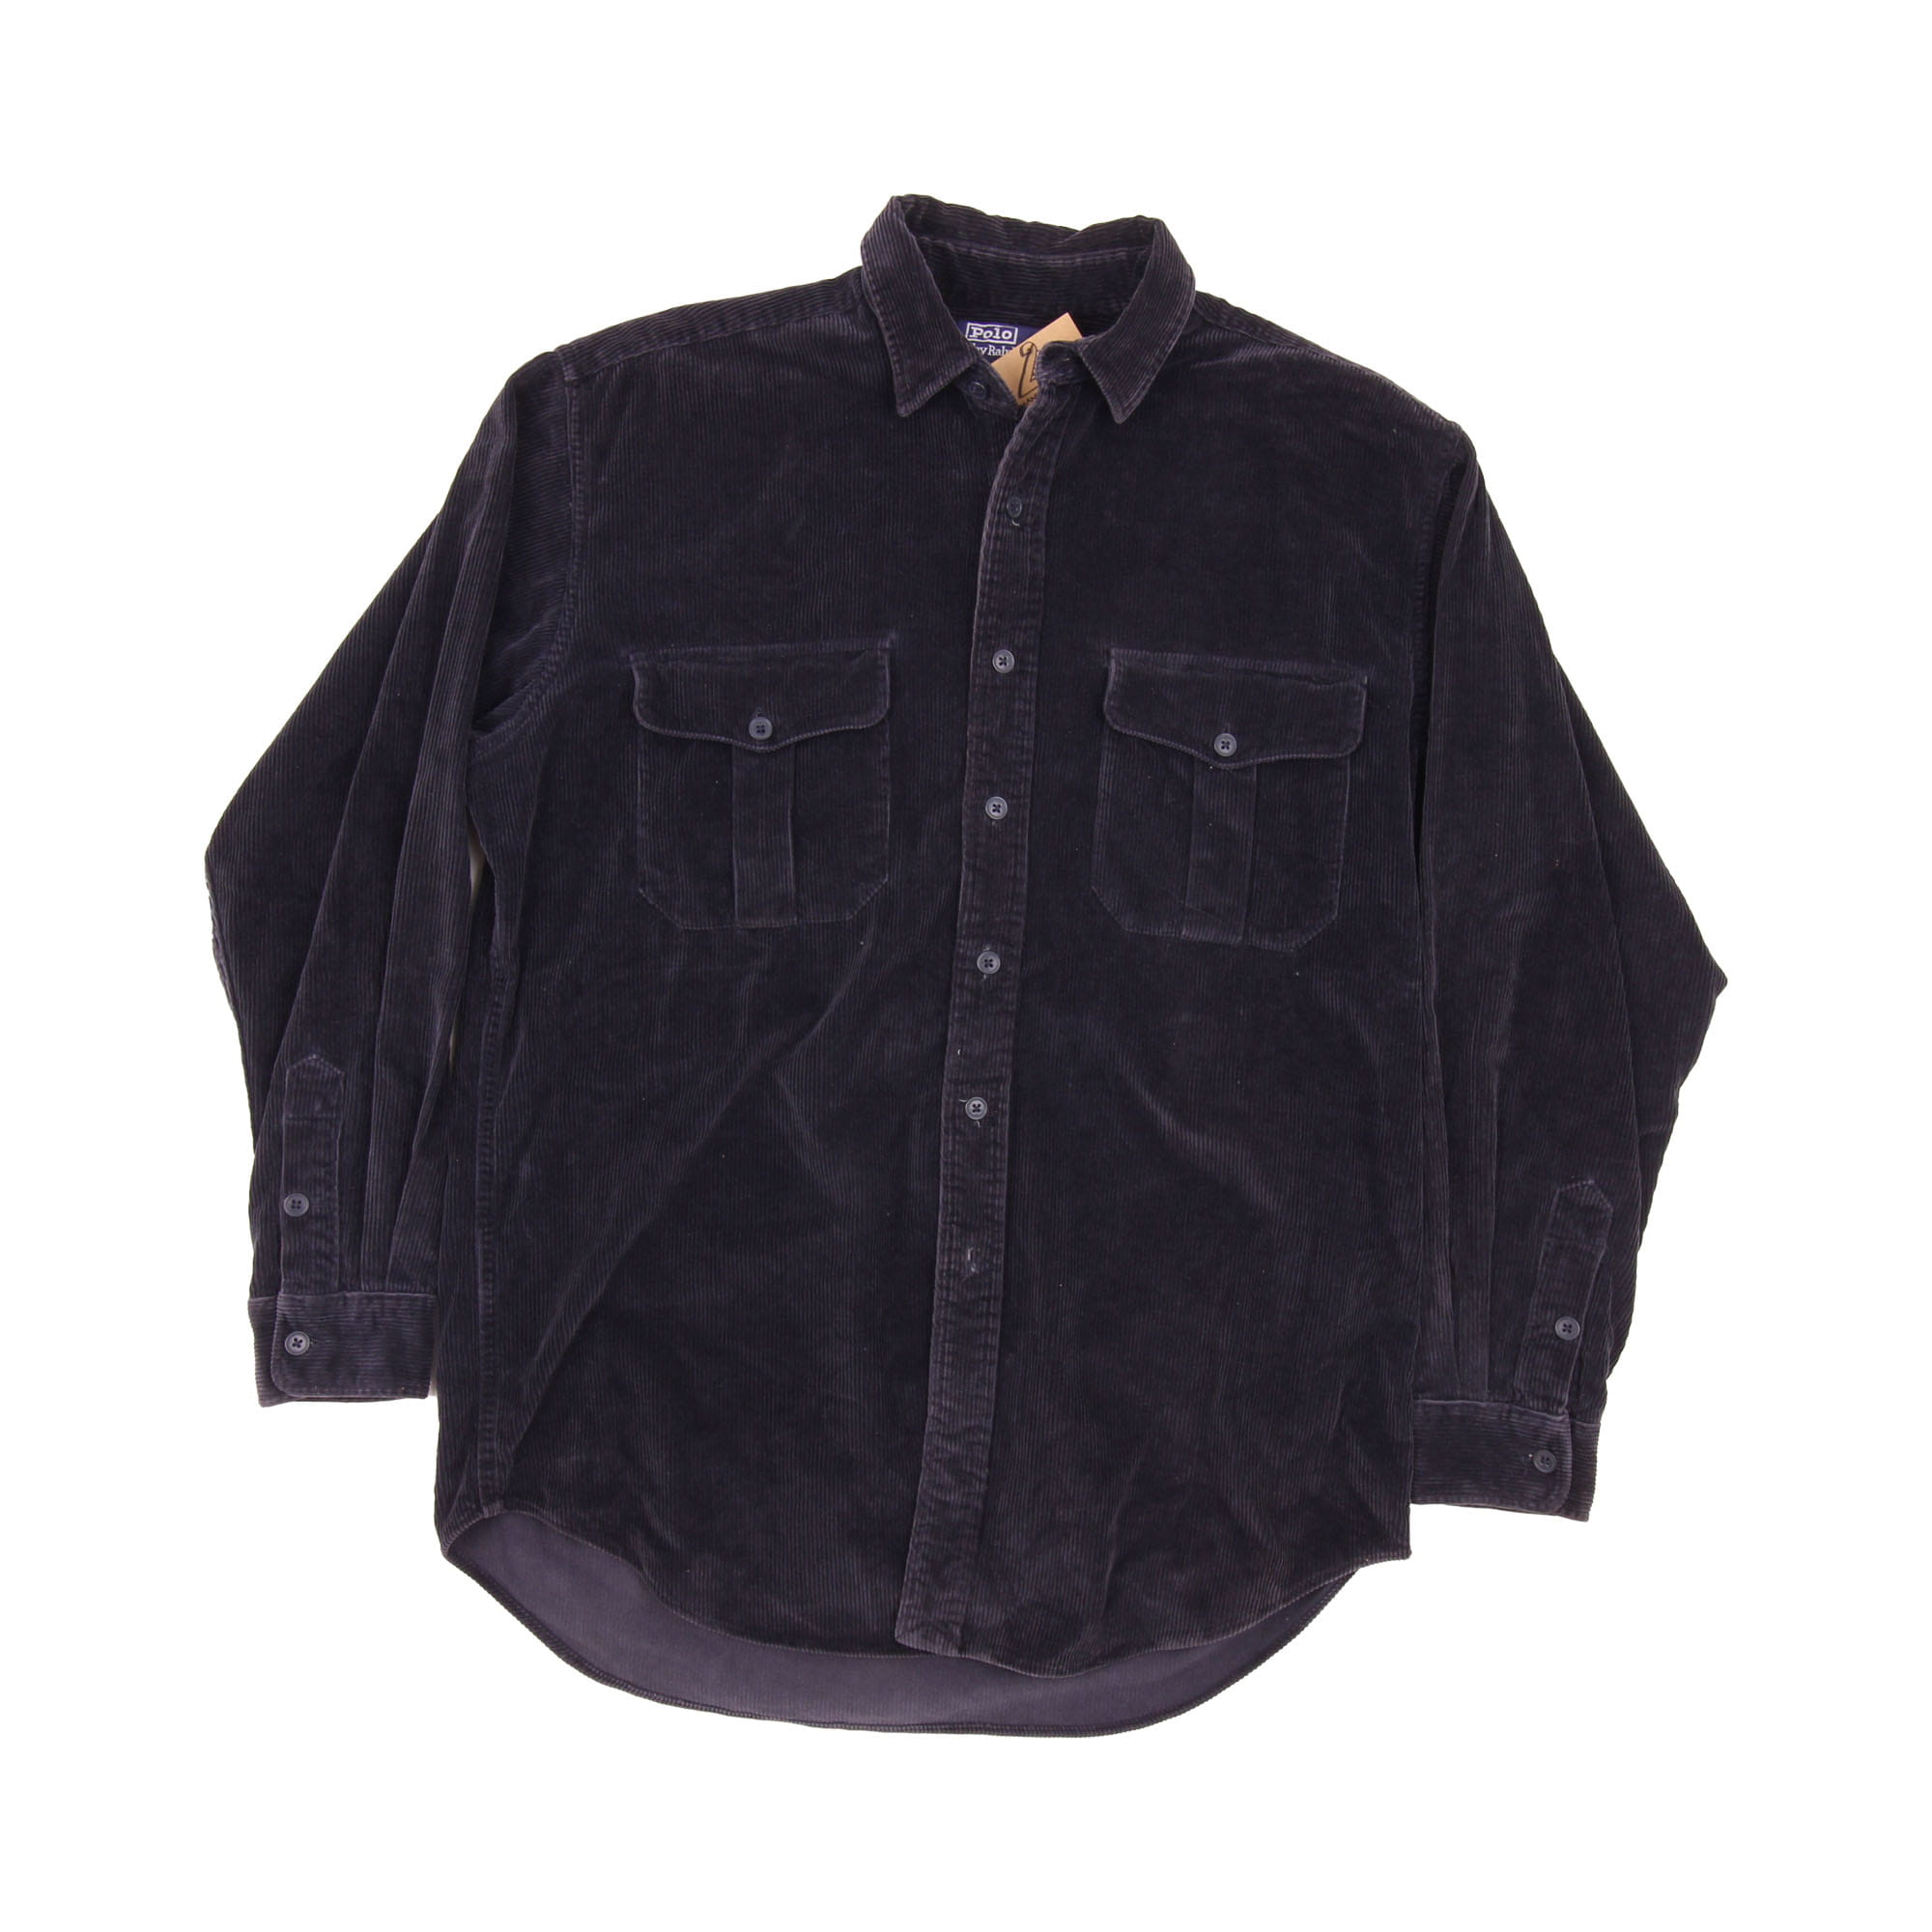 Polo Ralph Lauren Cord Shirt Black - XL 